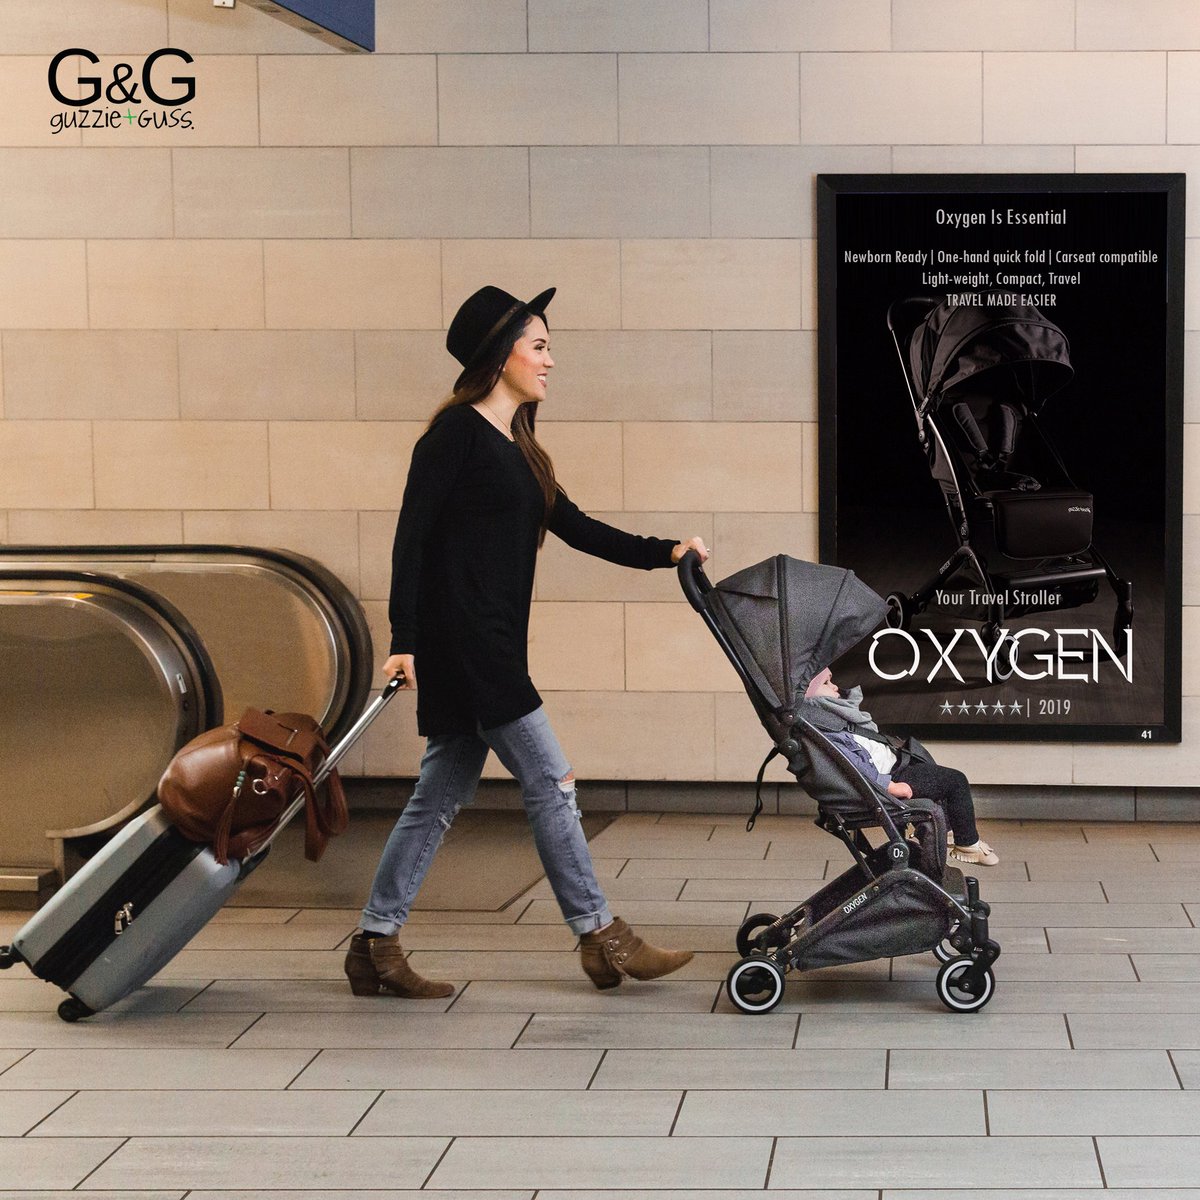 guzzie and guss oxygen stroller